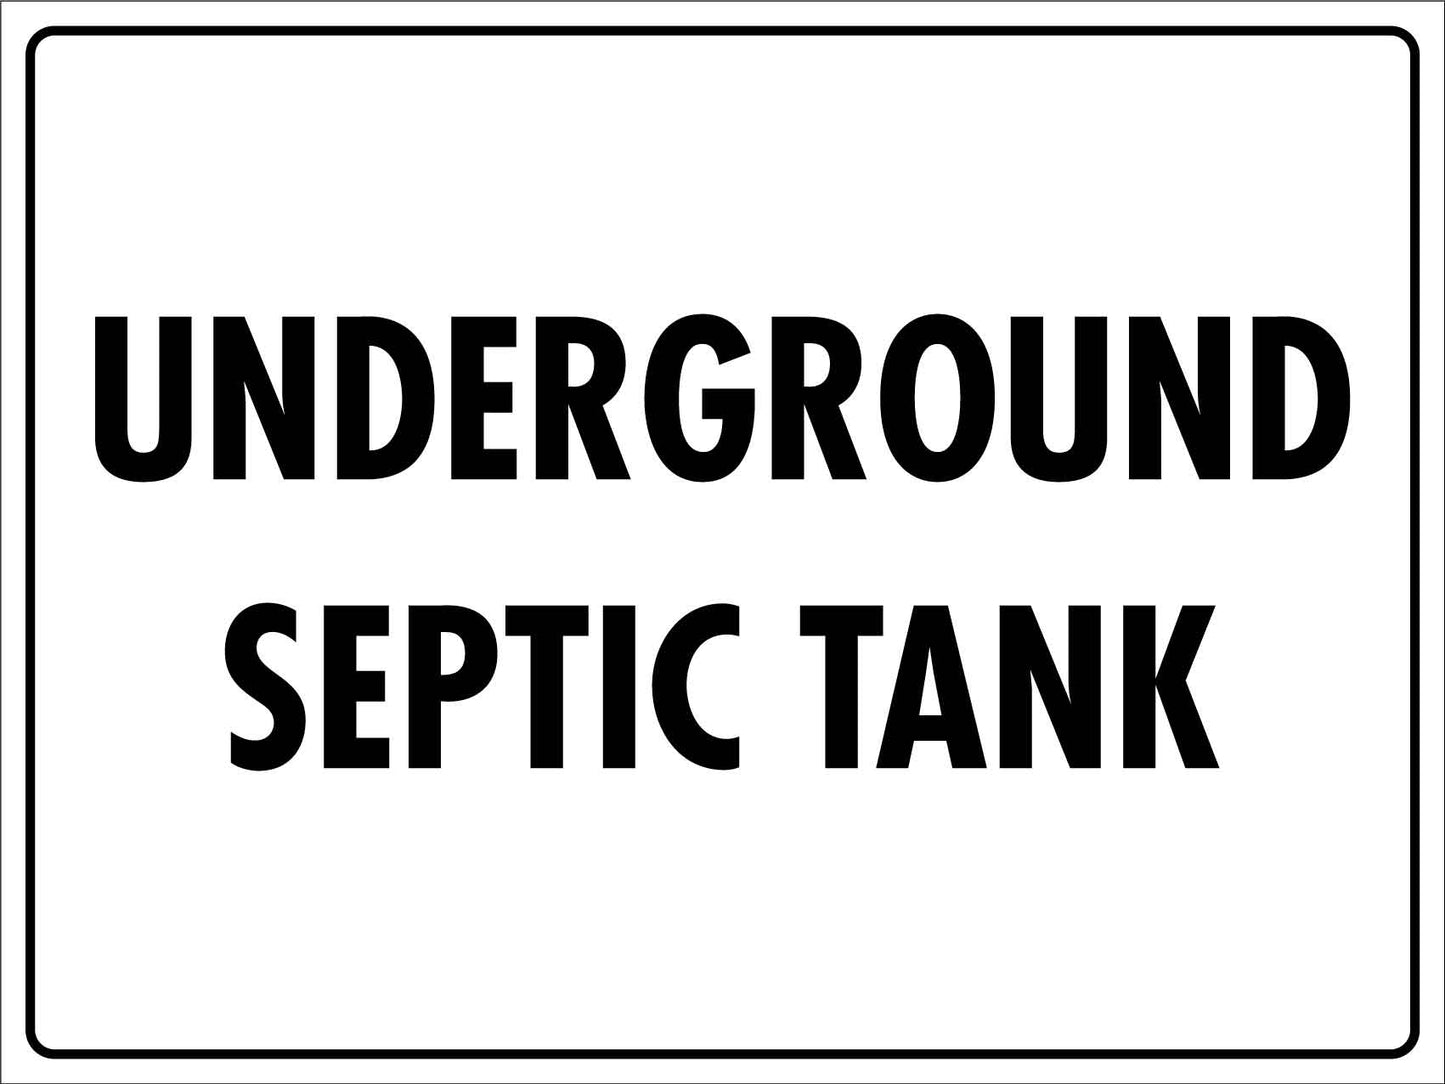 Underground Septic Tank Sign